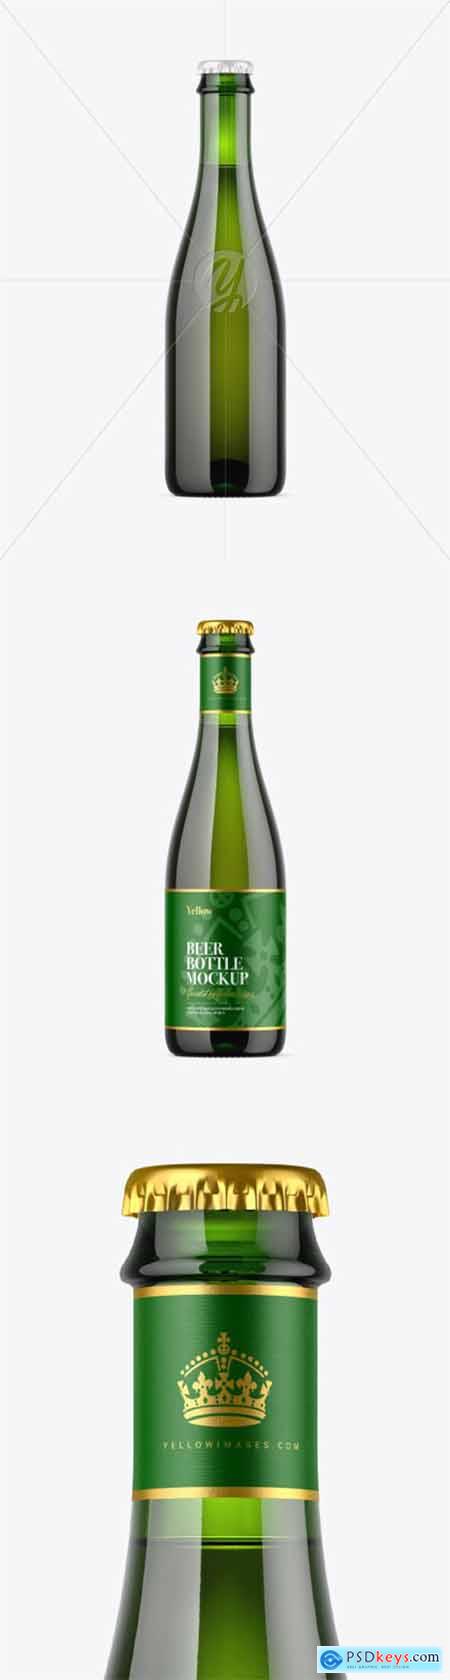 Green Glass Beer Bottle Mockup 80509